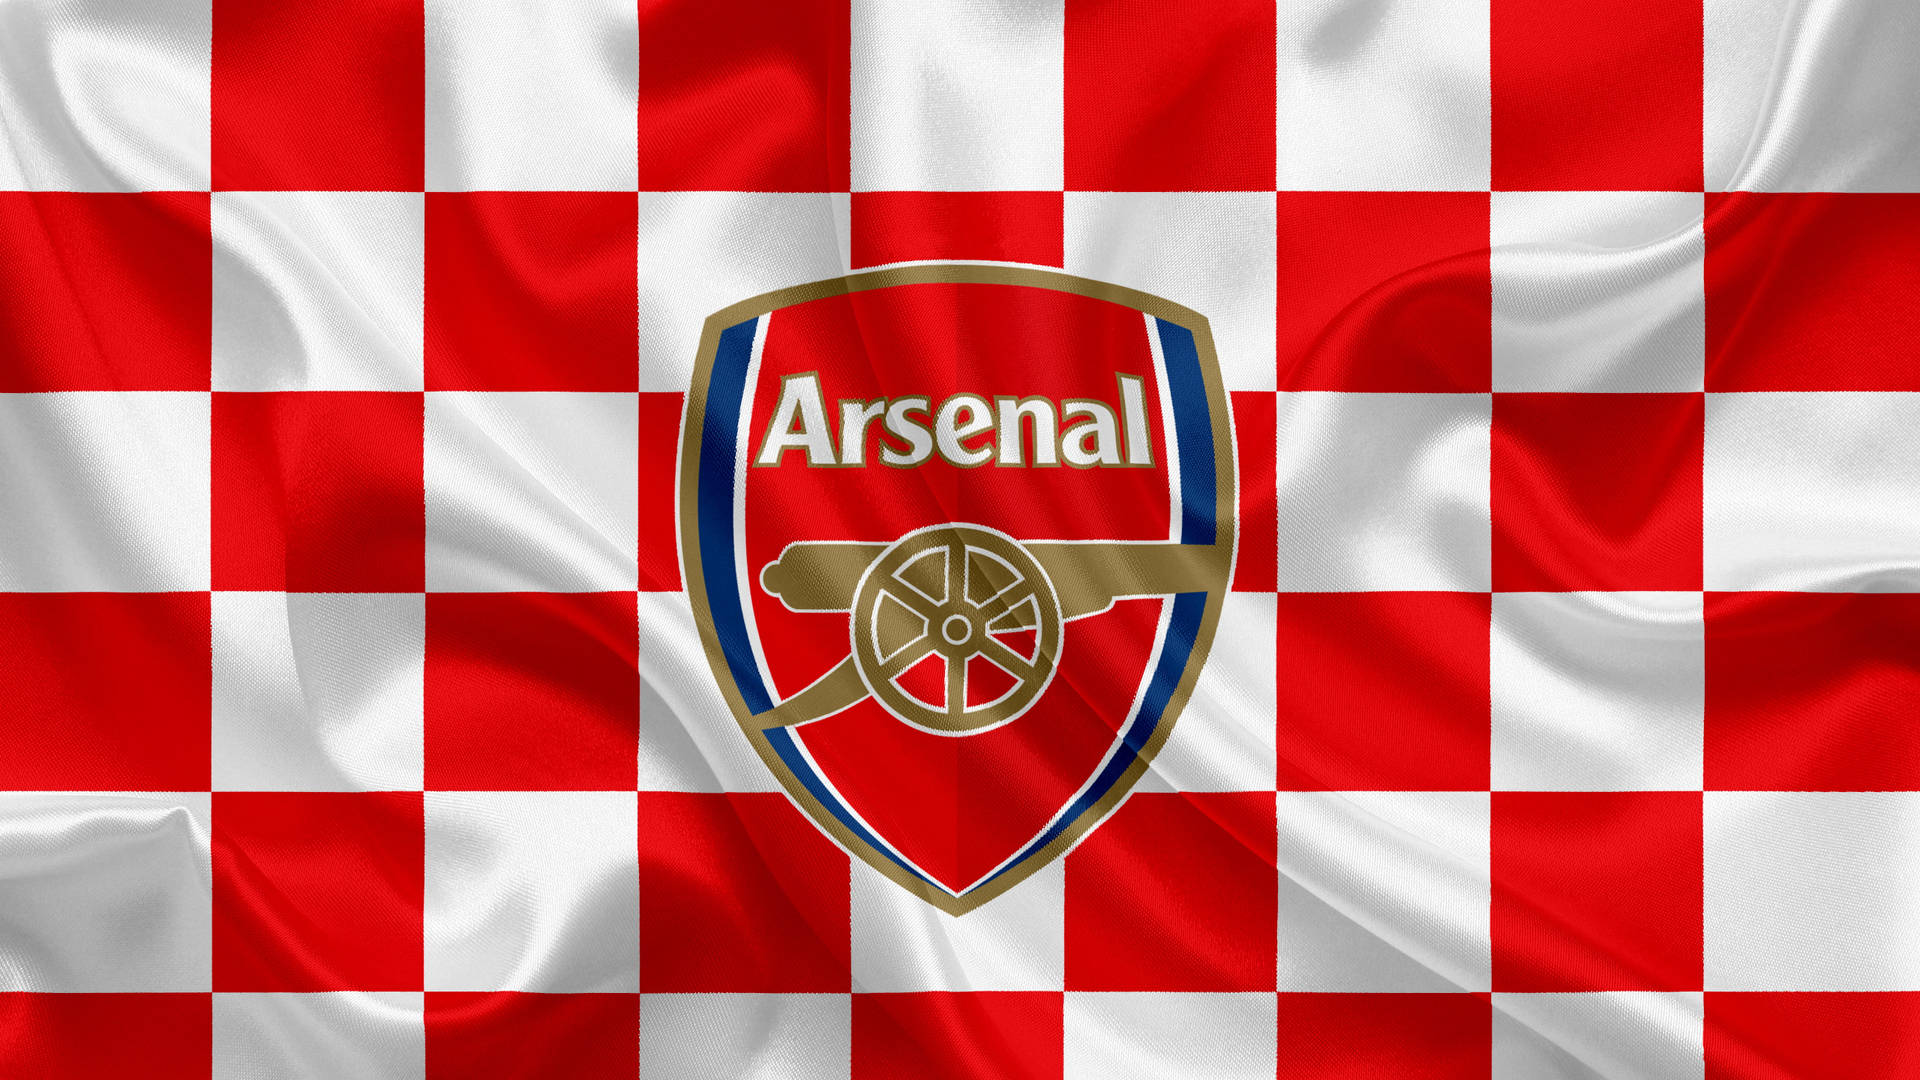 Free Arsenal Wallpaper Downloads, Arsenal Wallpaper for FREE